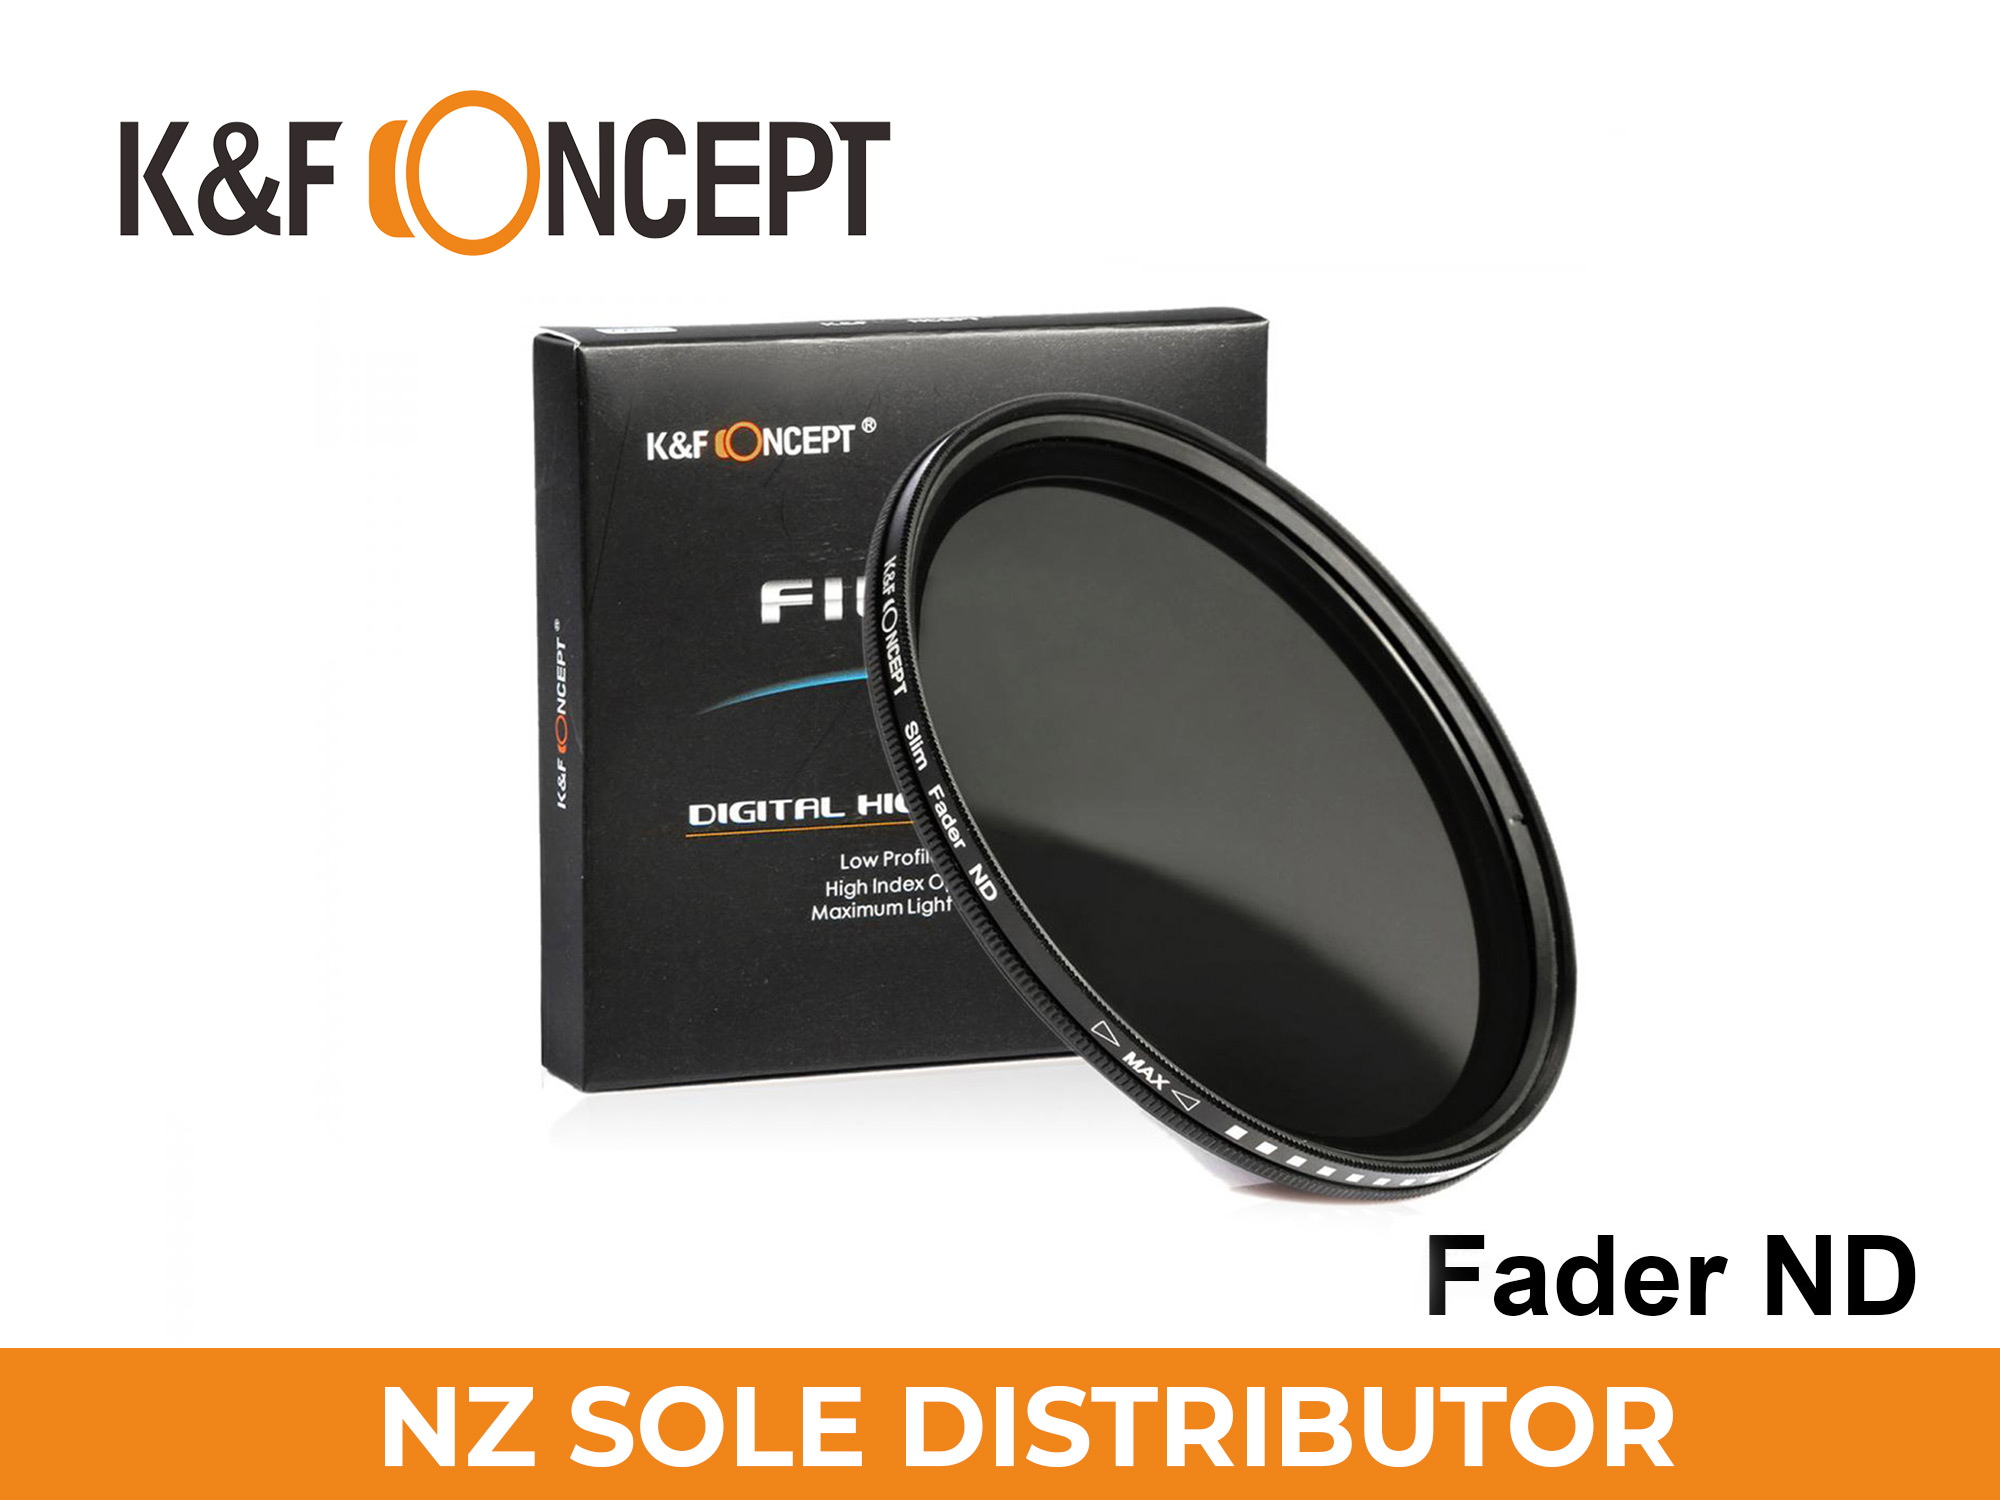 JJC Lens Filter Pouch Case for Circular Filter Up to 82mm (37mm 40.5mm 49mm 52mm 55mm 58mm 62mm 67mm 72mm 77mm), 3-Pocket Lens Filter Wallet Storage